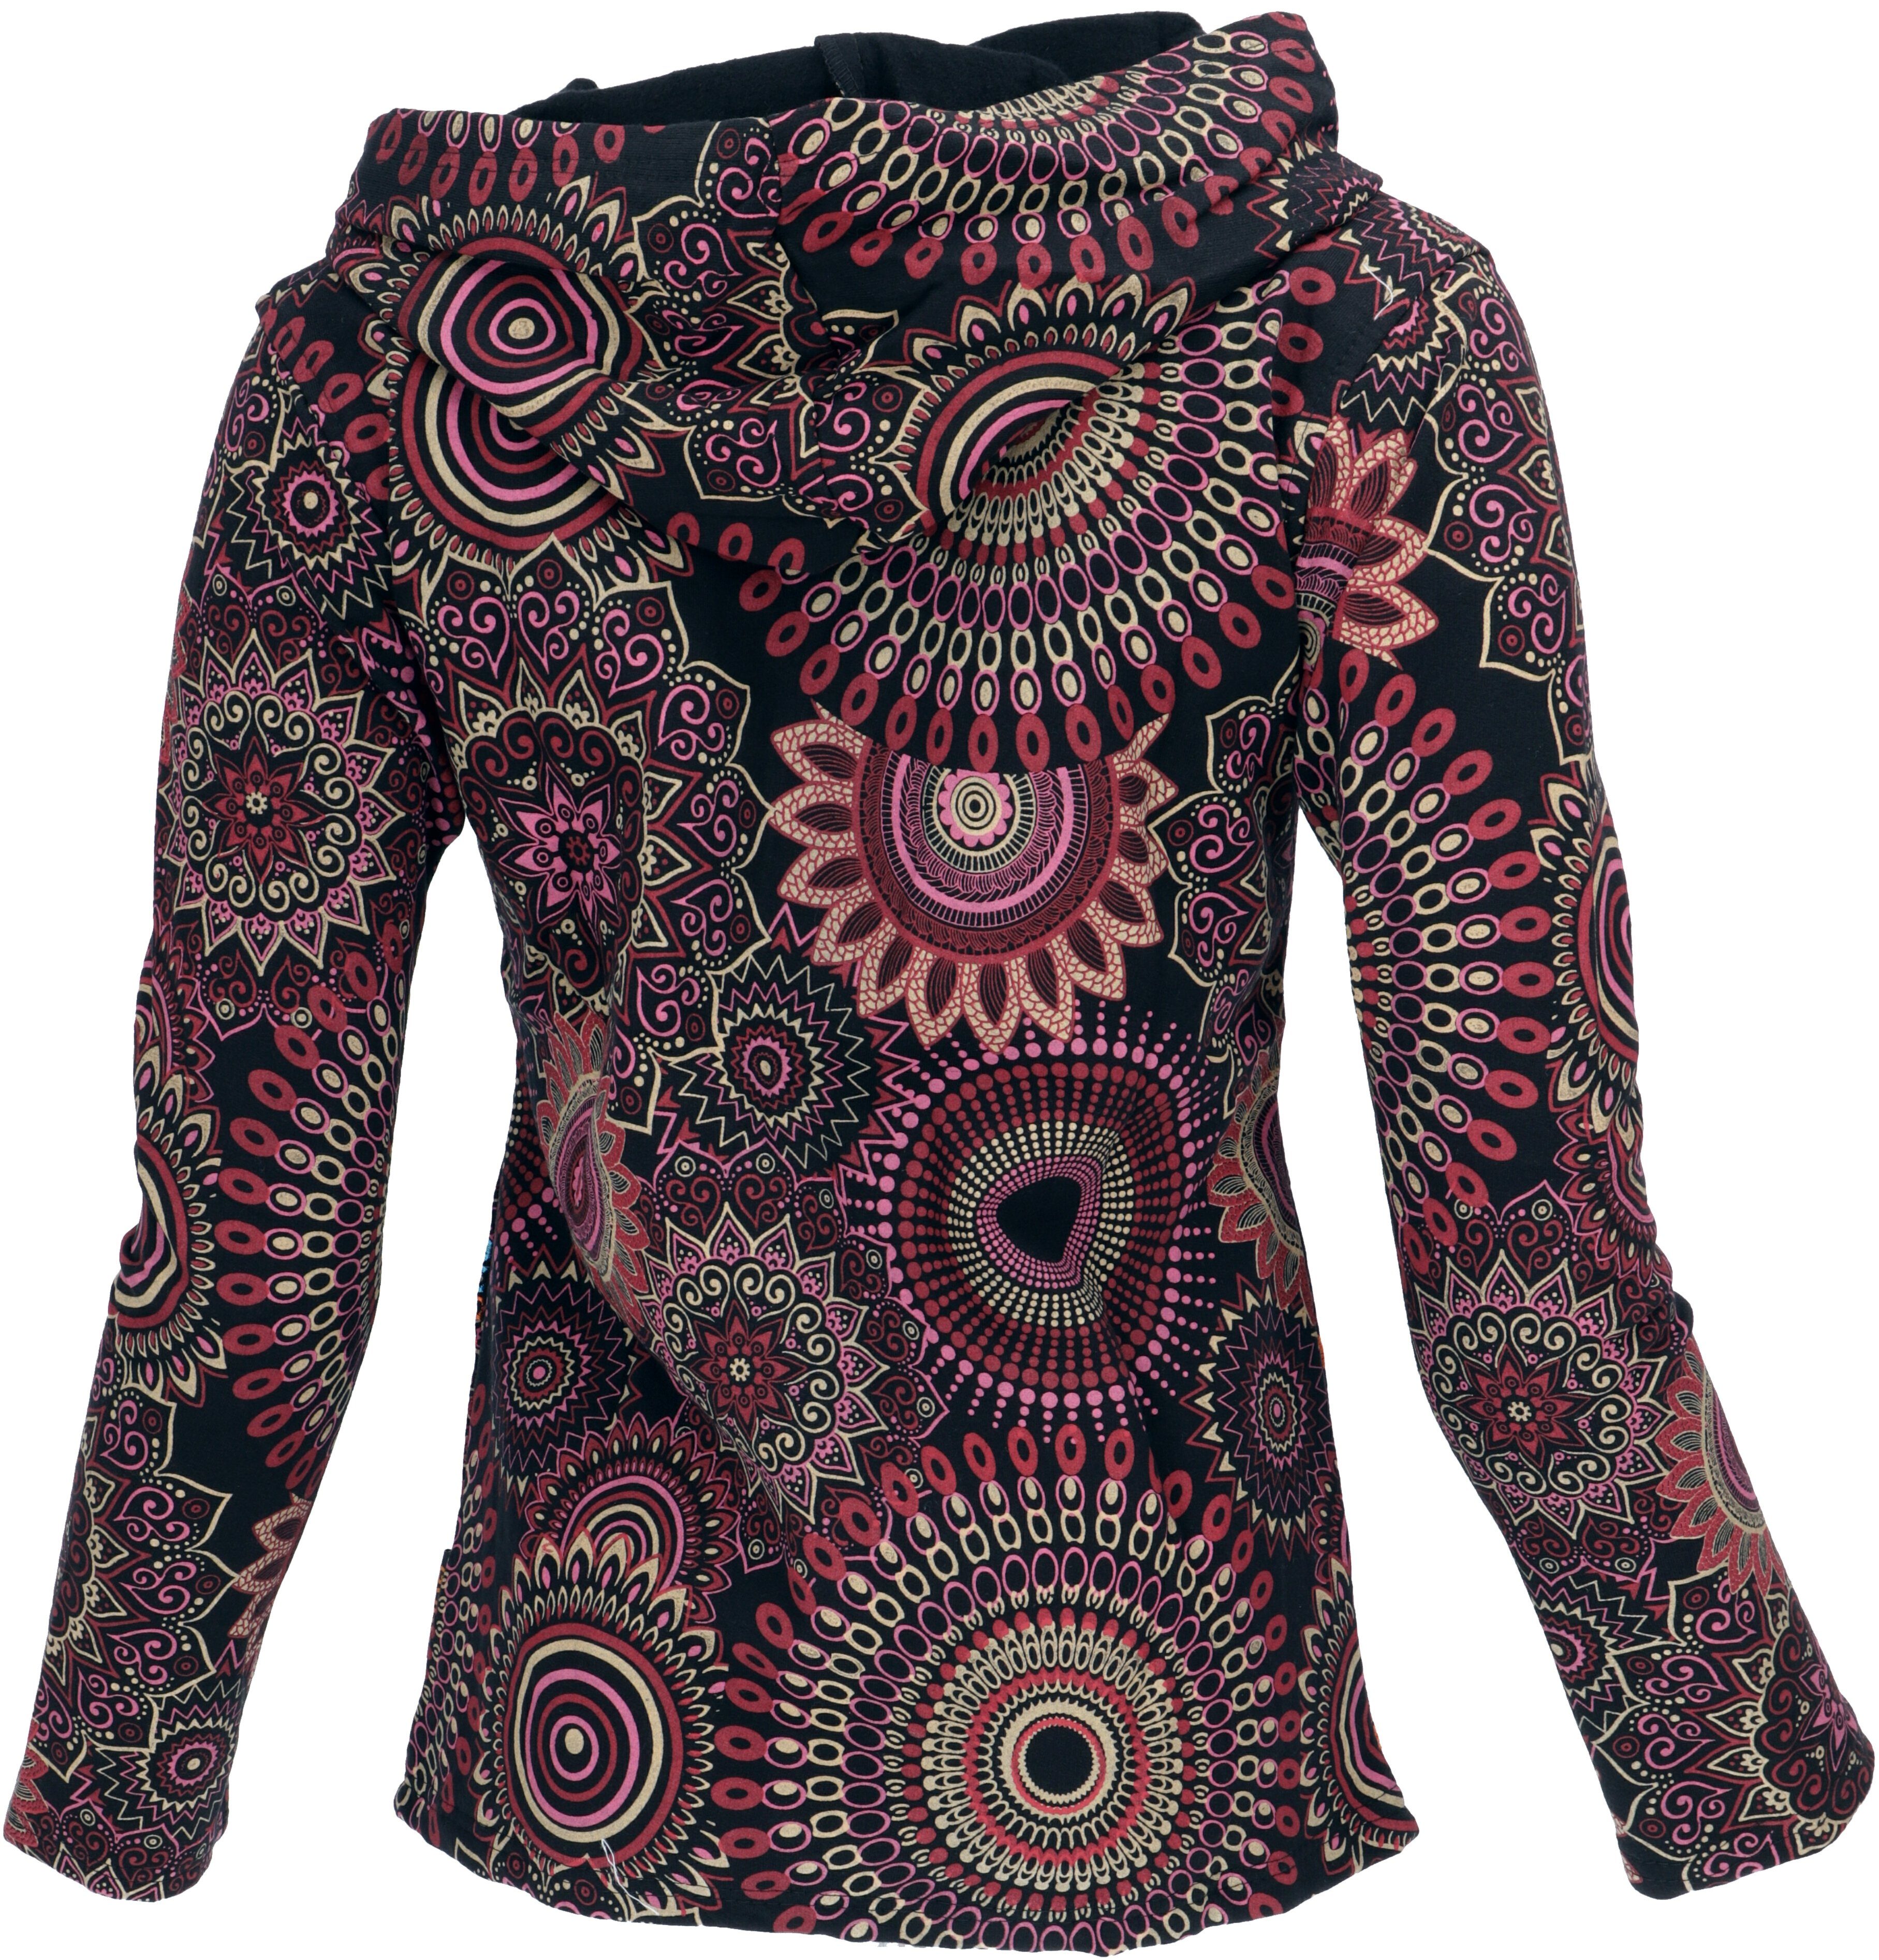 Langjacke schwarz/pink Boho Guru-Shop Jacke, Bekleidung alternative Jacke -.. Hippie bestickte chic